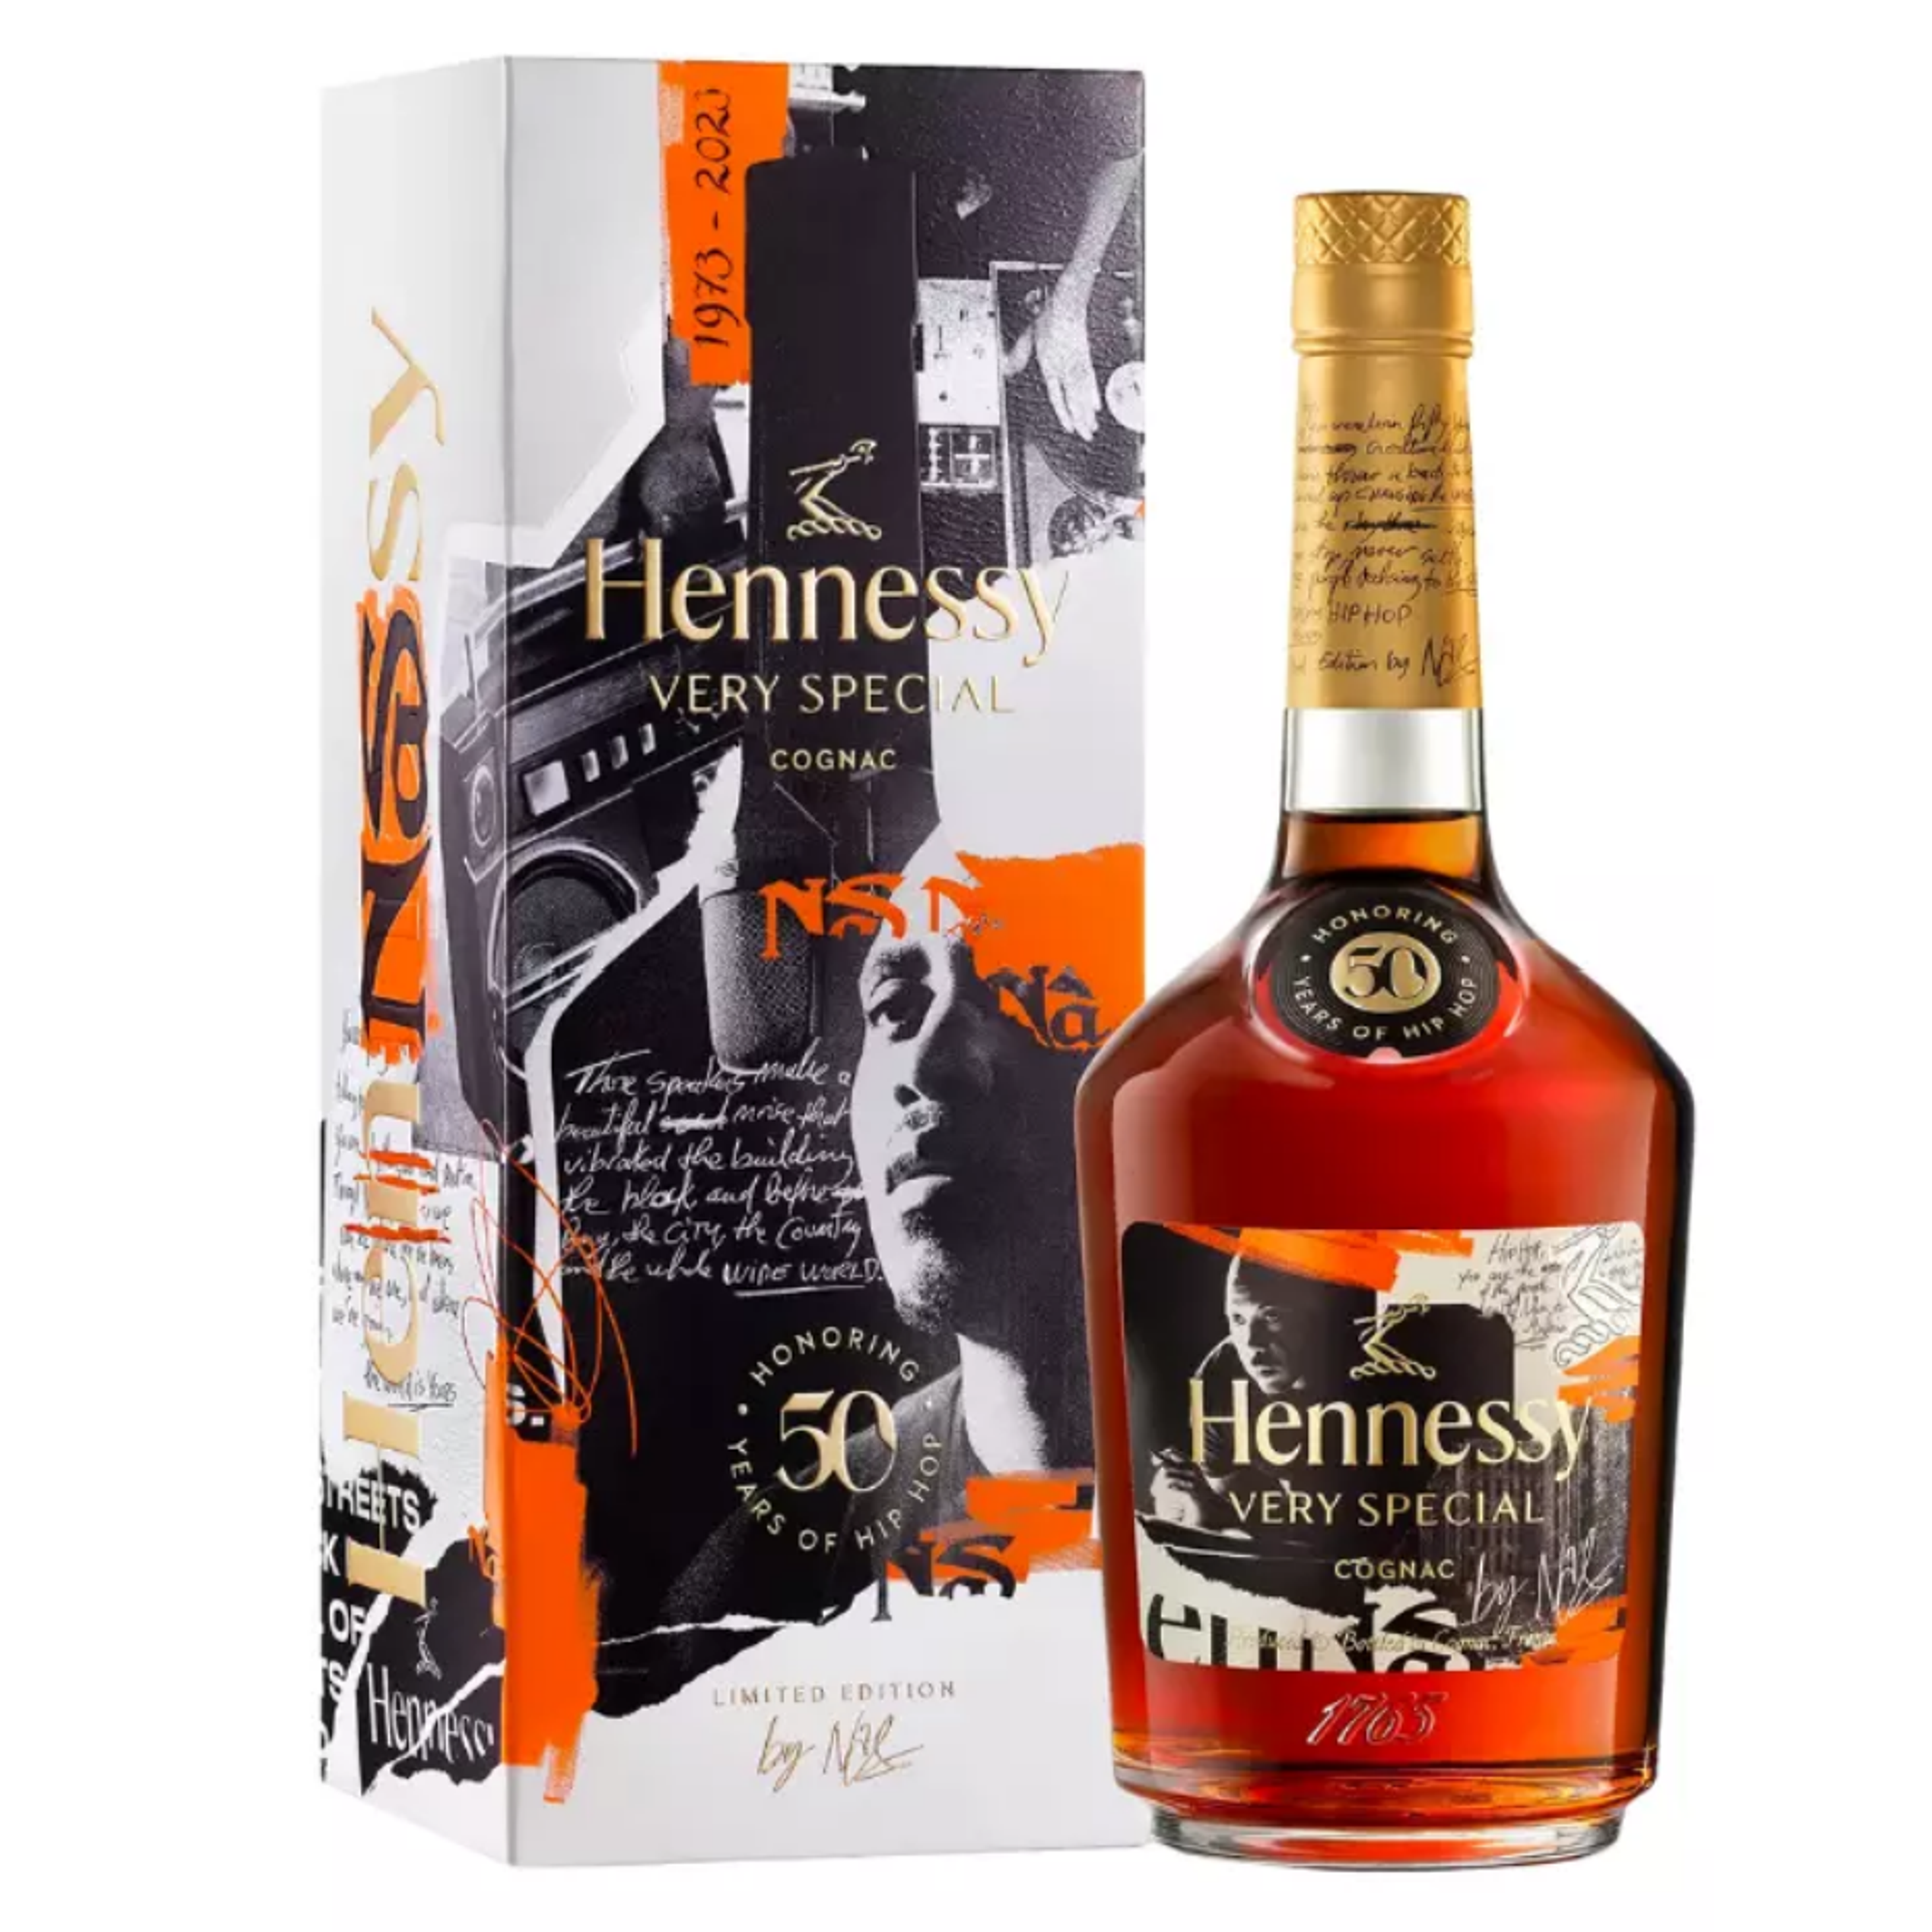 Hennessy VSOP Limited Edition By Maluma 750ml - High Spirits